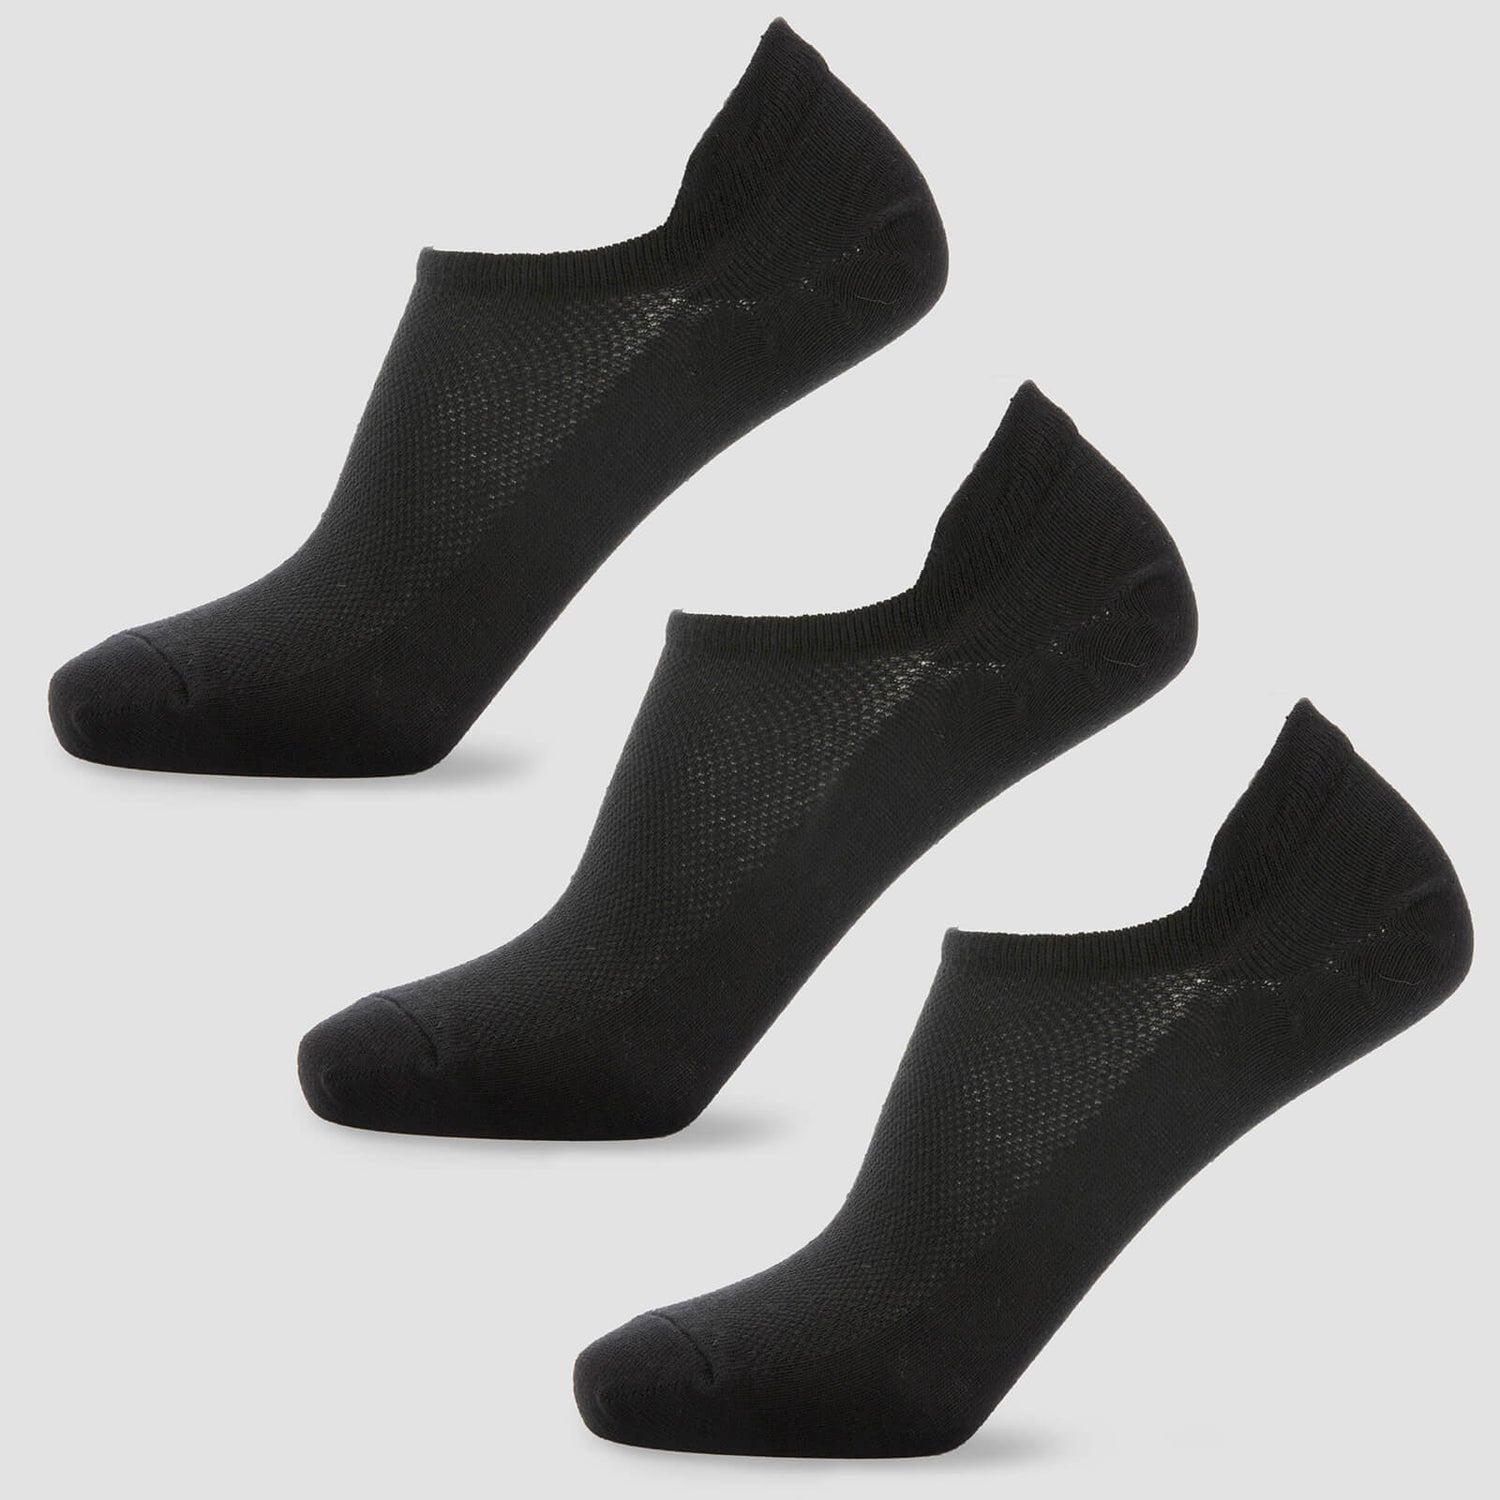 Women's Ankle Socks - Schwarz - UK 7-9